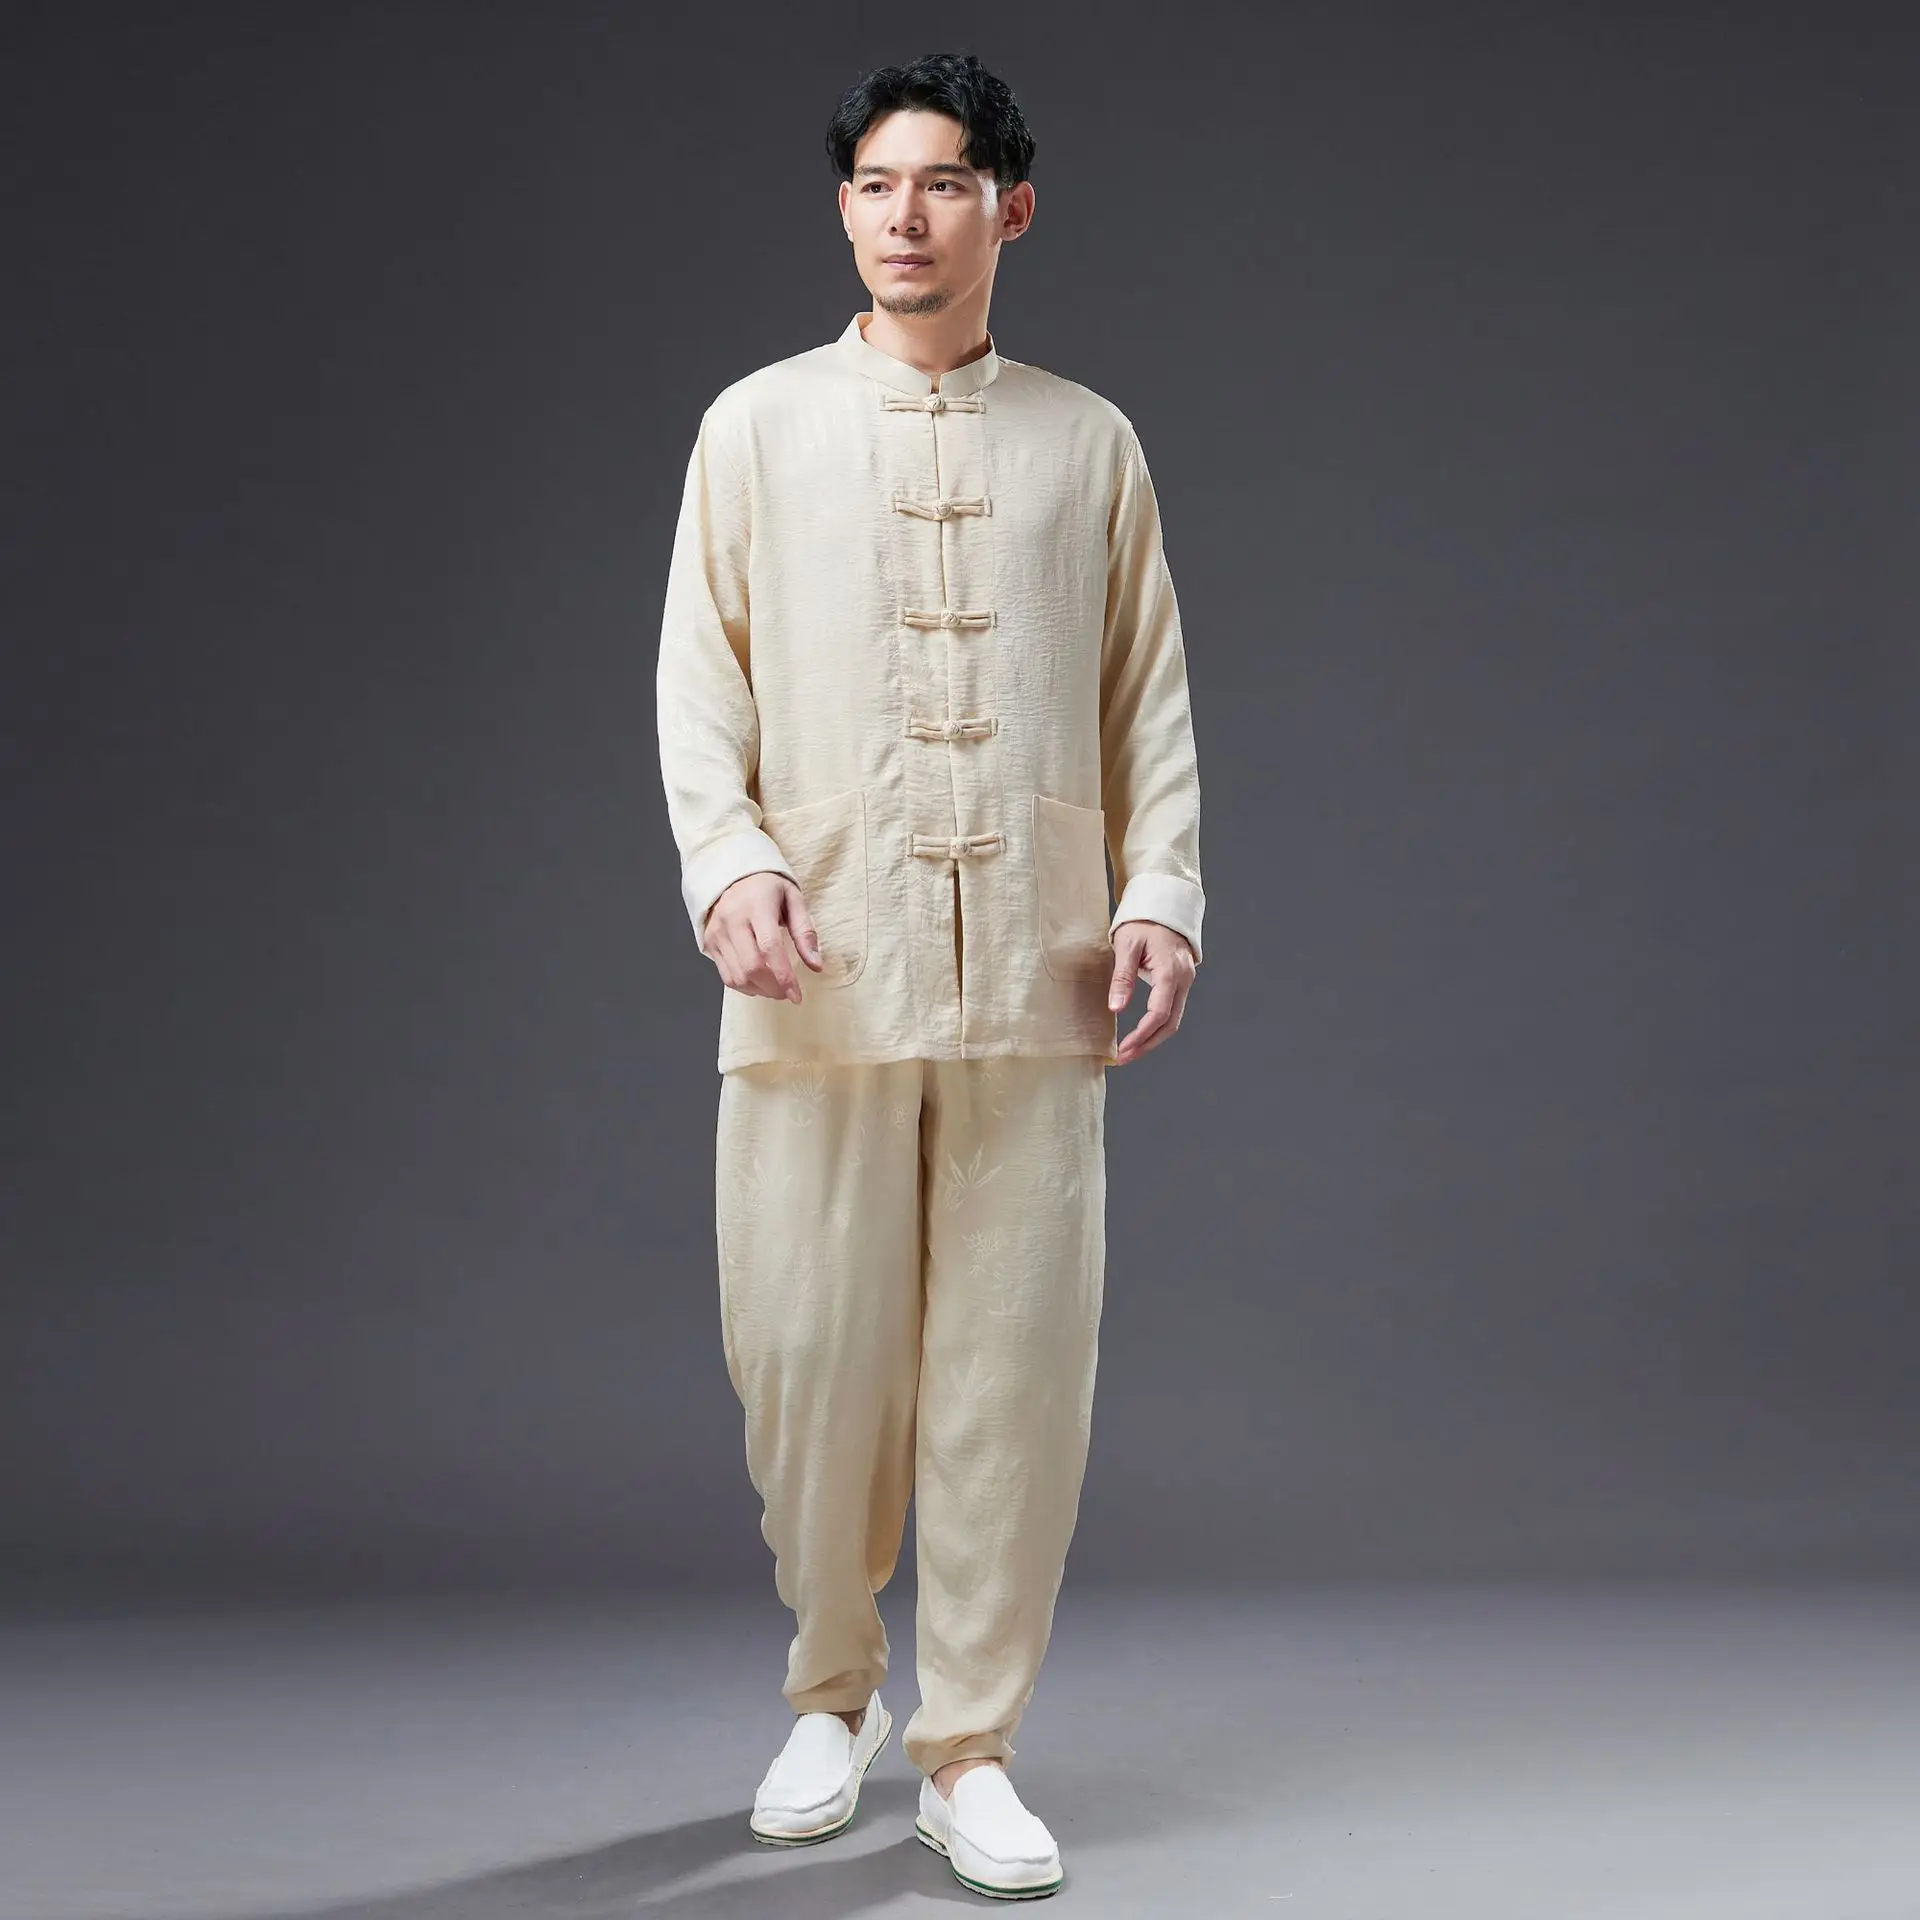 

Men Martial Arts Kungfu Wushu Uniforms Cotton Linen Loose Sweatshirt+pant Jogger Fitness Casual Athletic Meditation Tai Chi Set